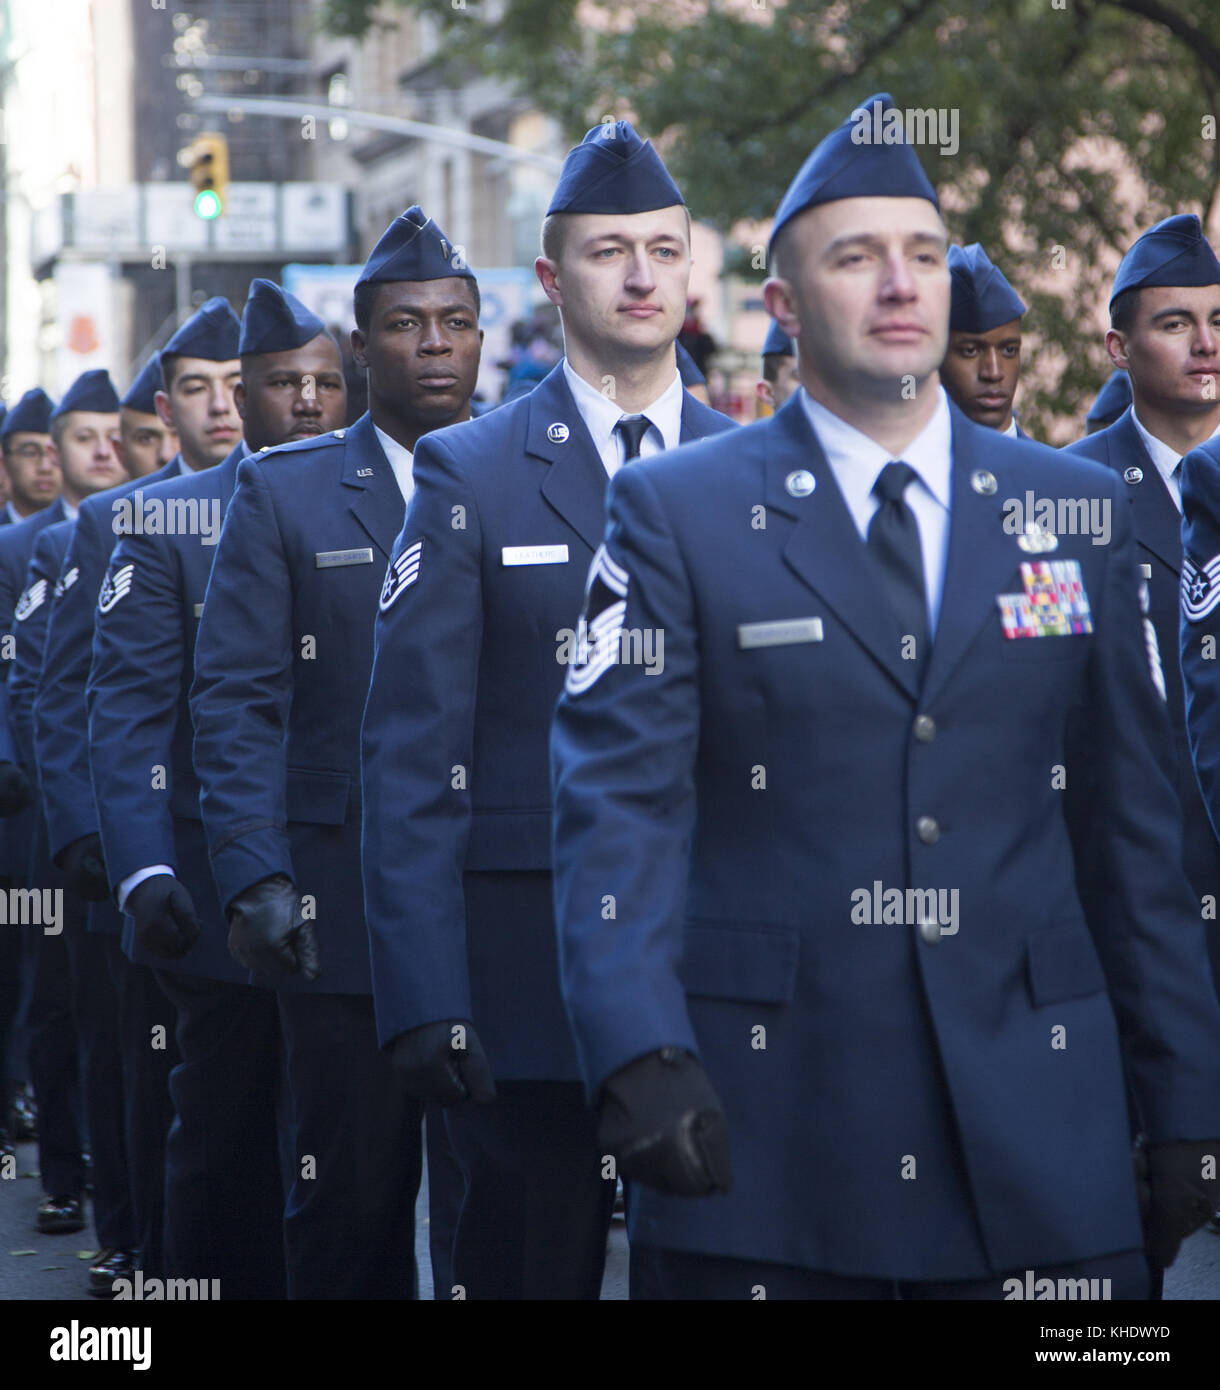 United States Air Force Dress Uniform